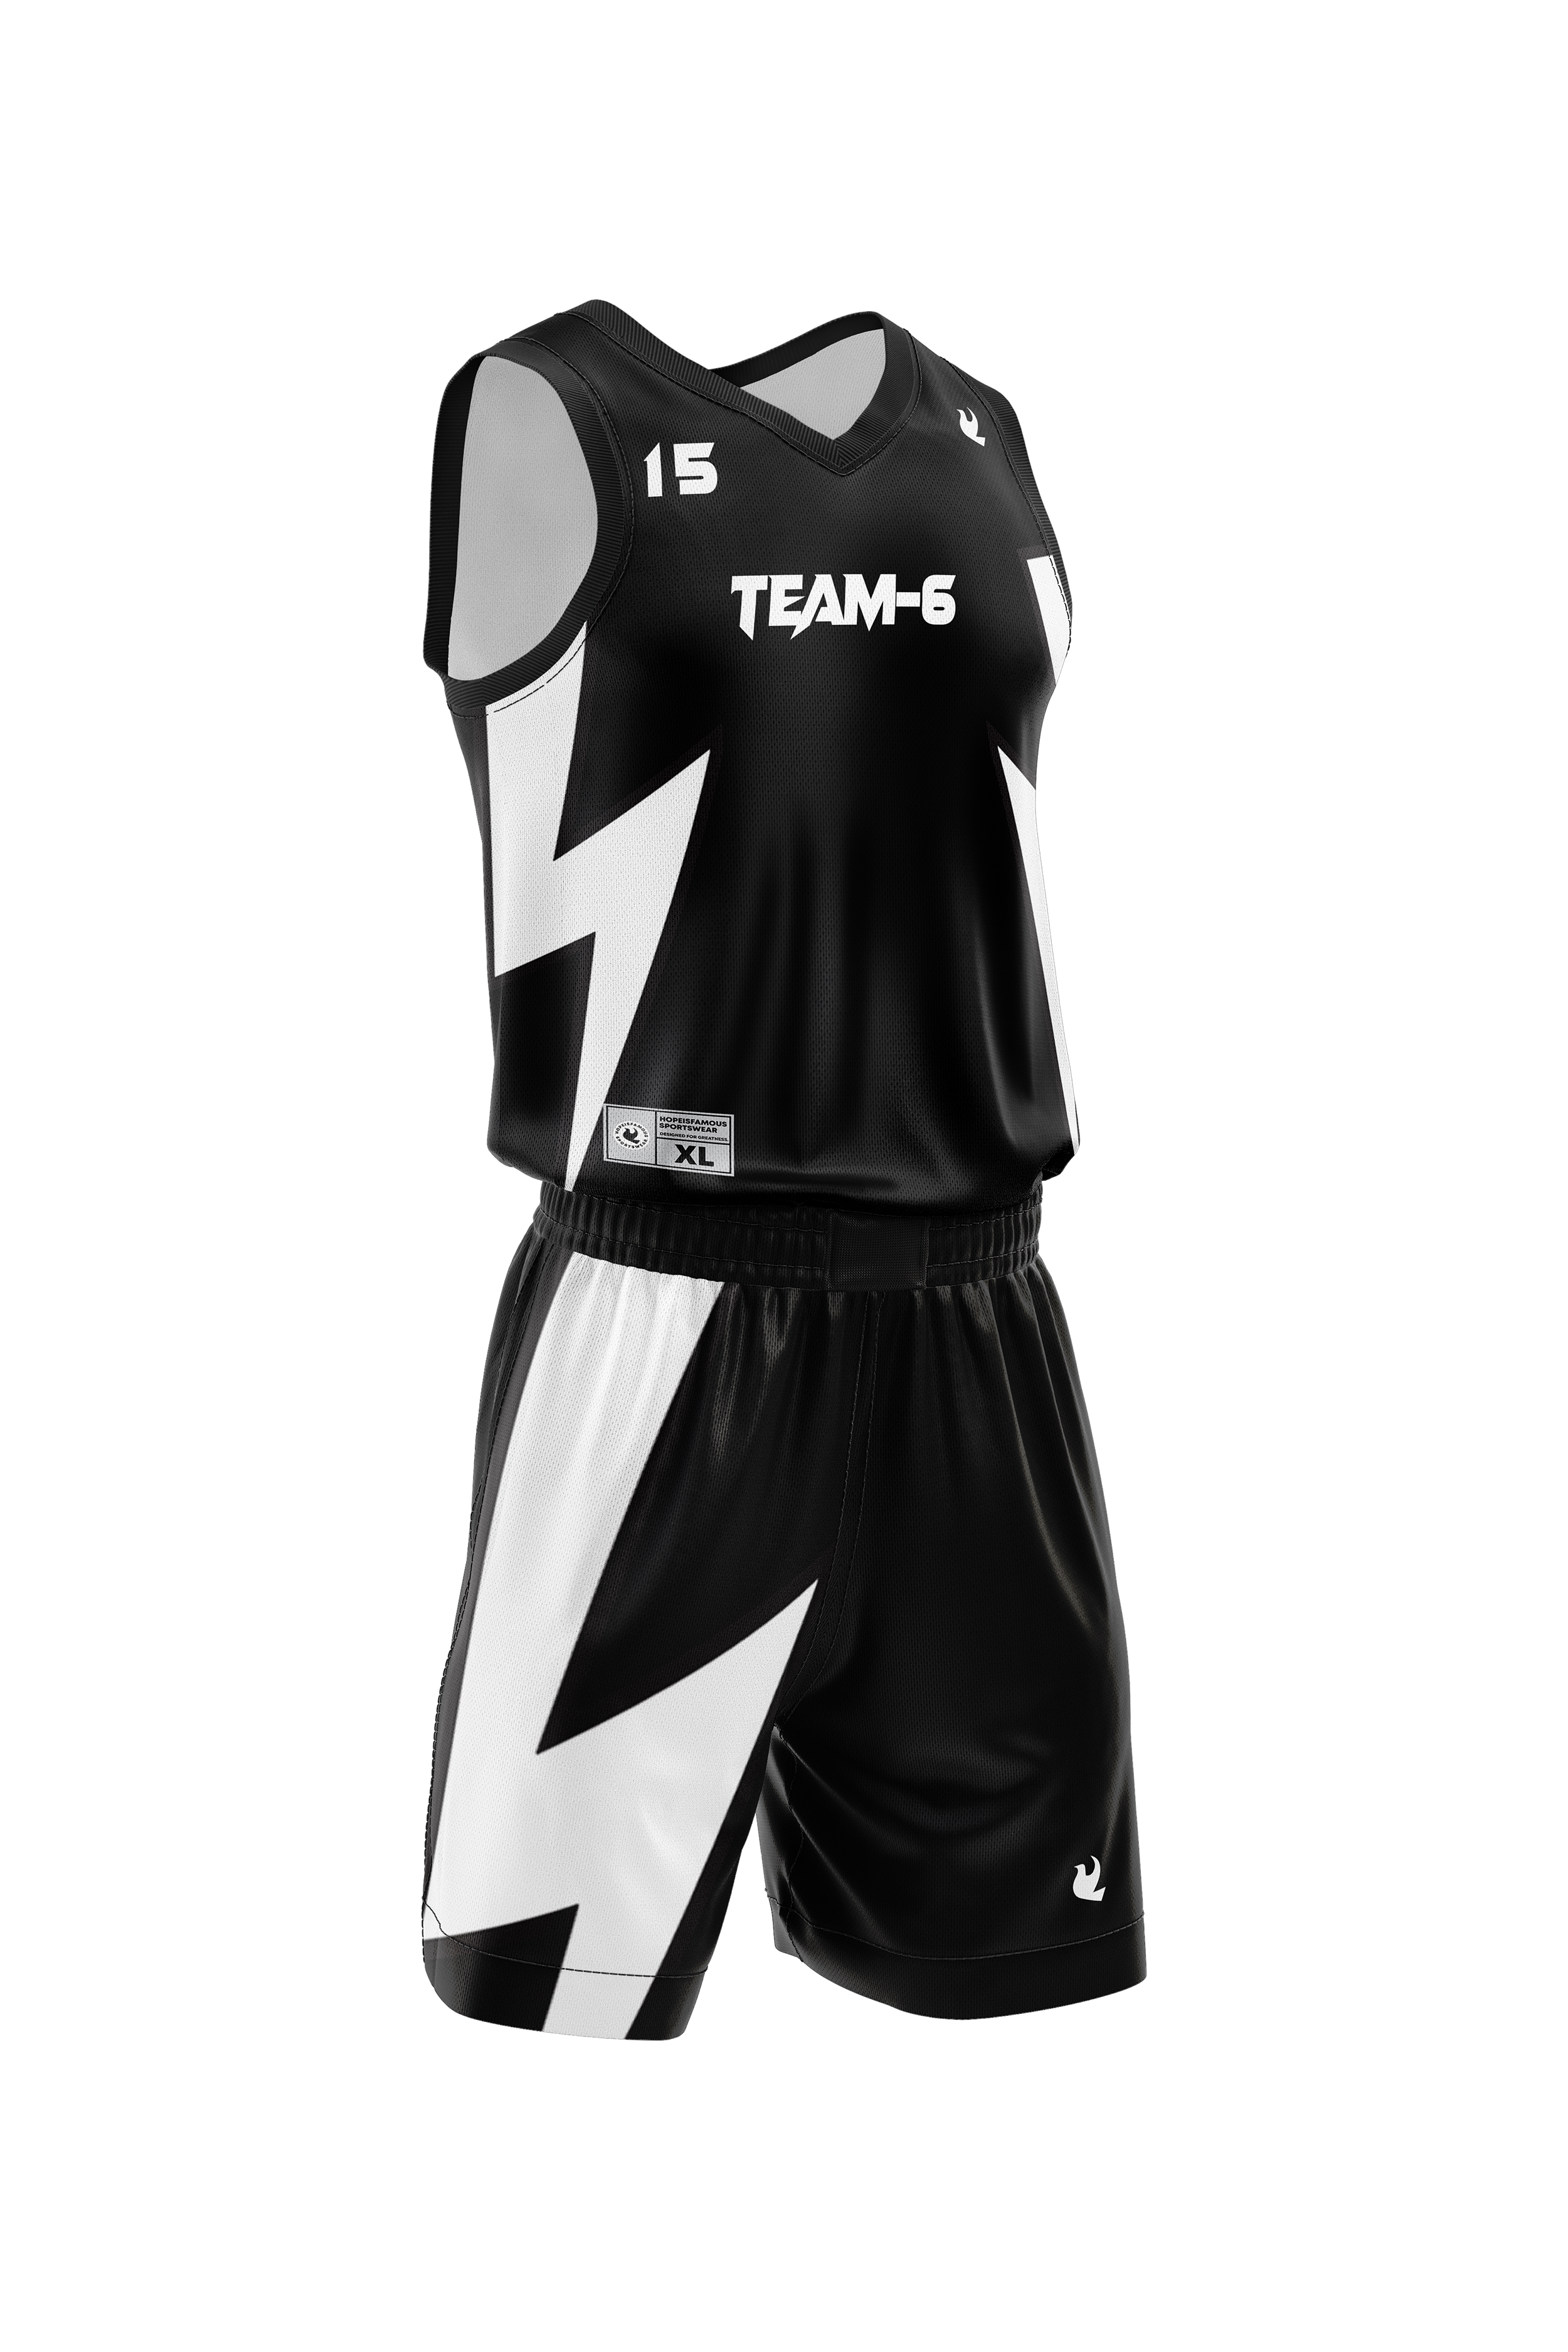 M-Power Basketball Uniform: Team-6